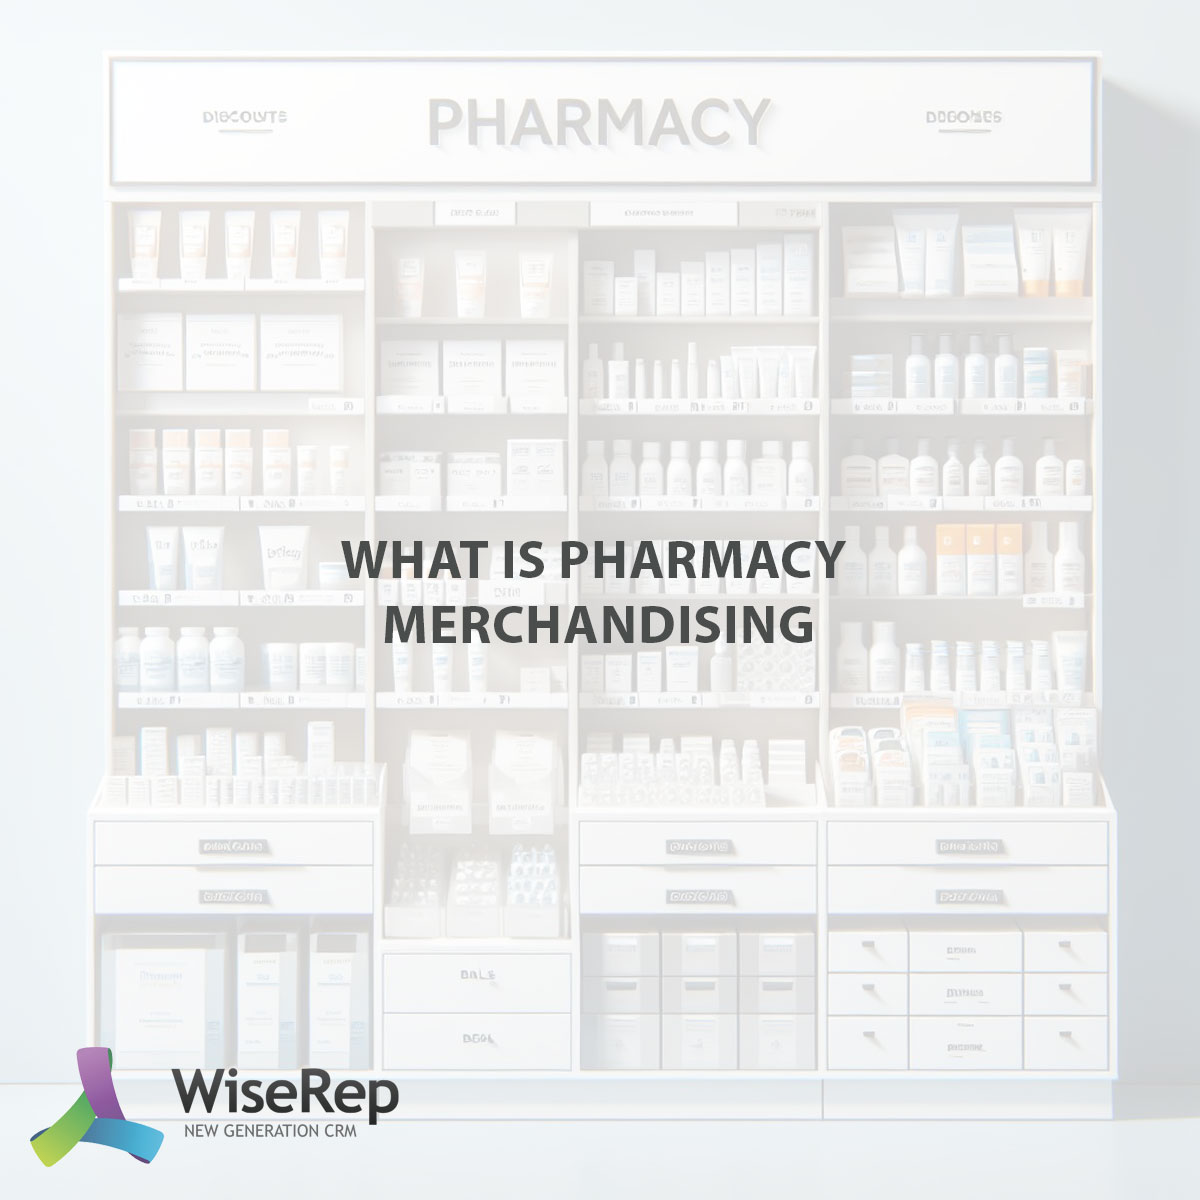 What is pharmacy merchandising?